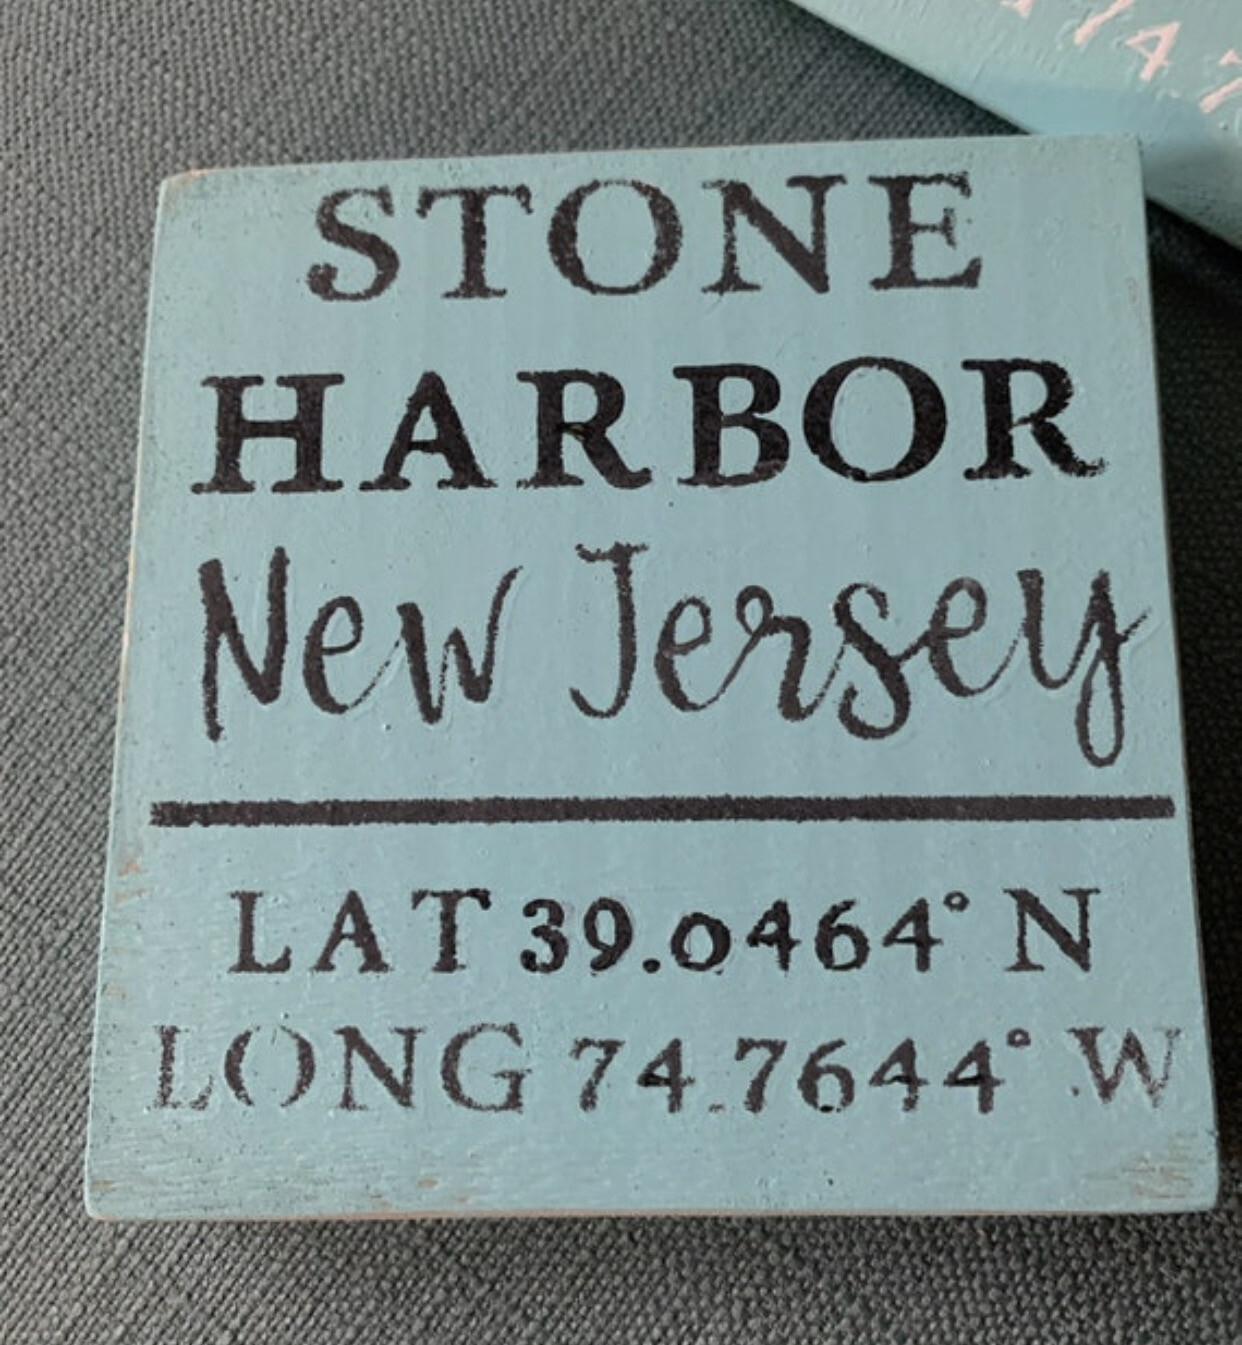 Rustic Wood Stone Harbor NJ Sign - GPS Coordinates Sign - Latitude Longitude Stone Harbor Sign